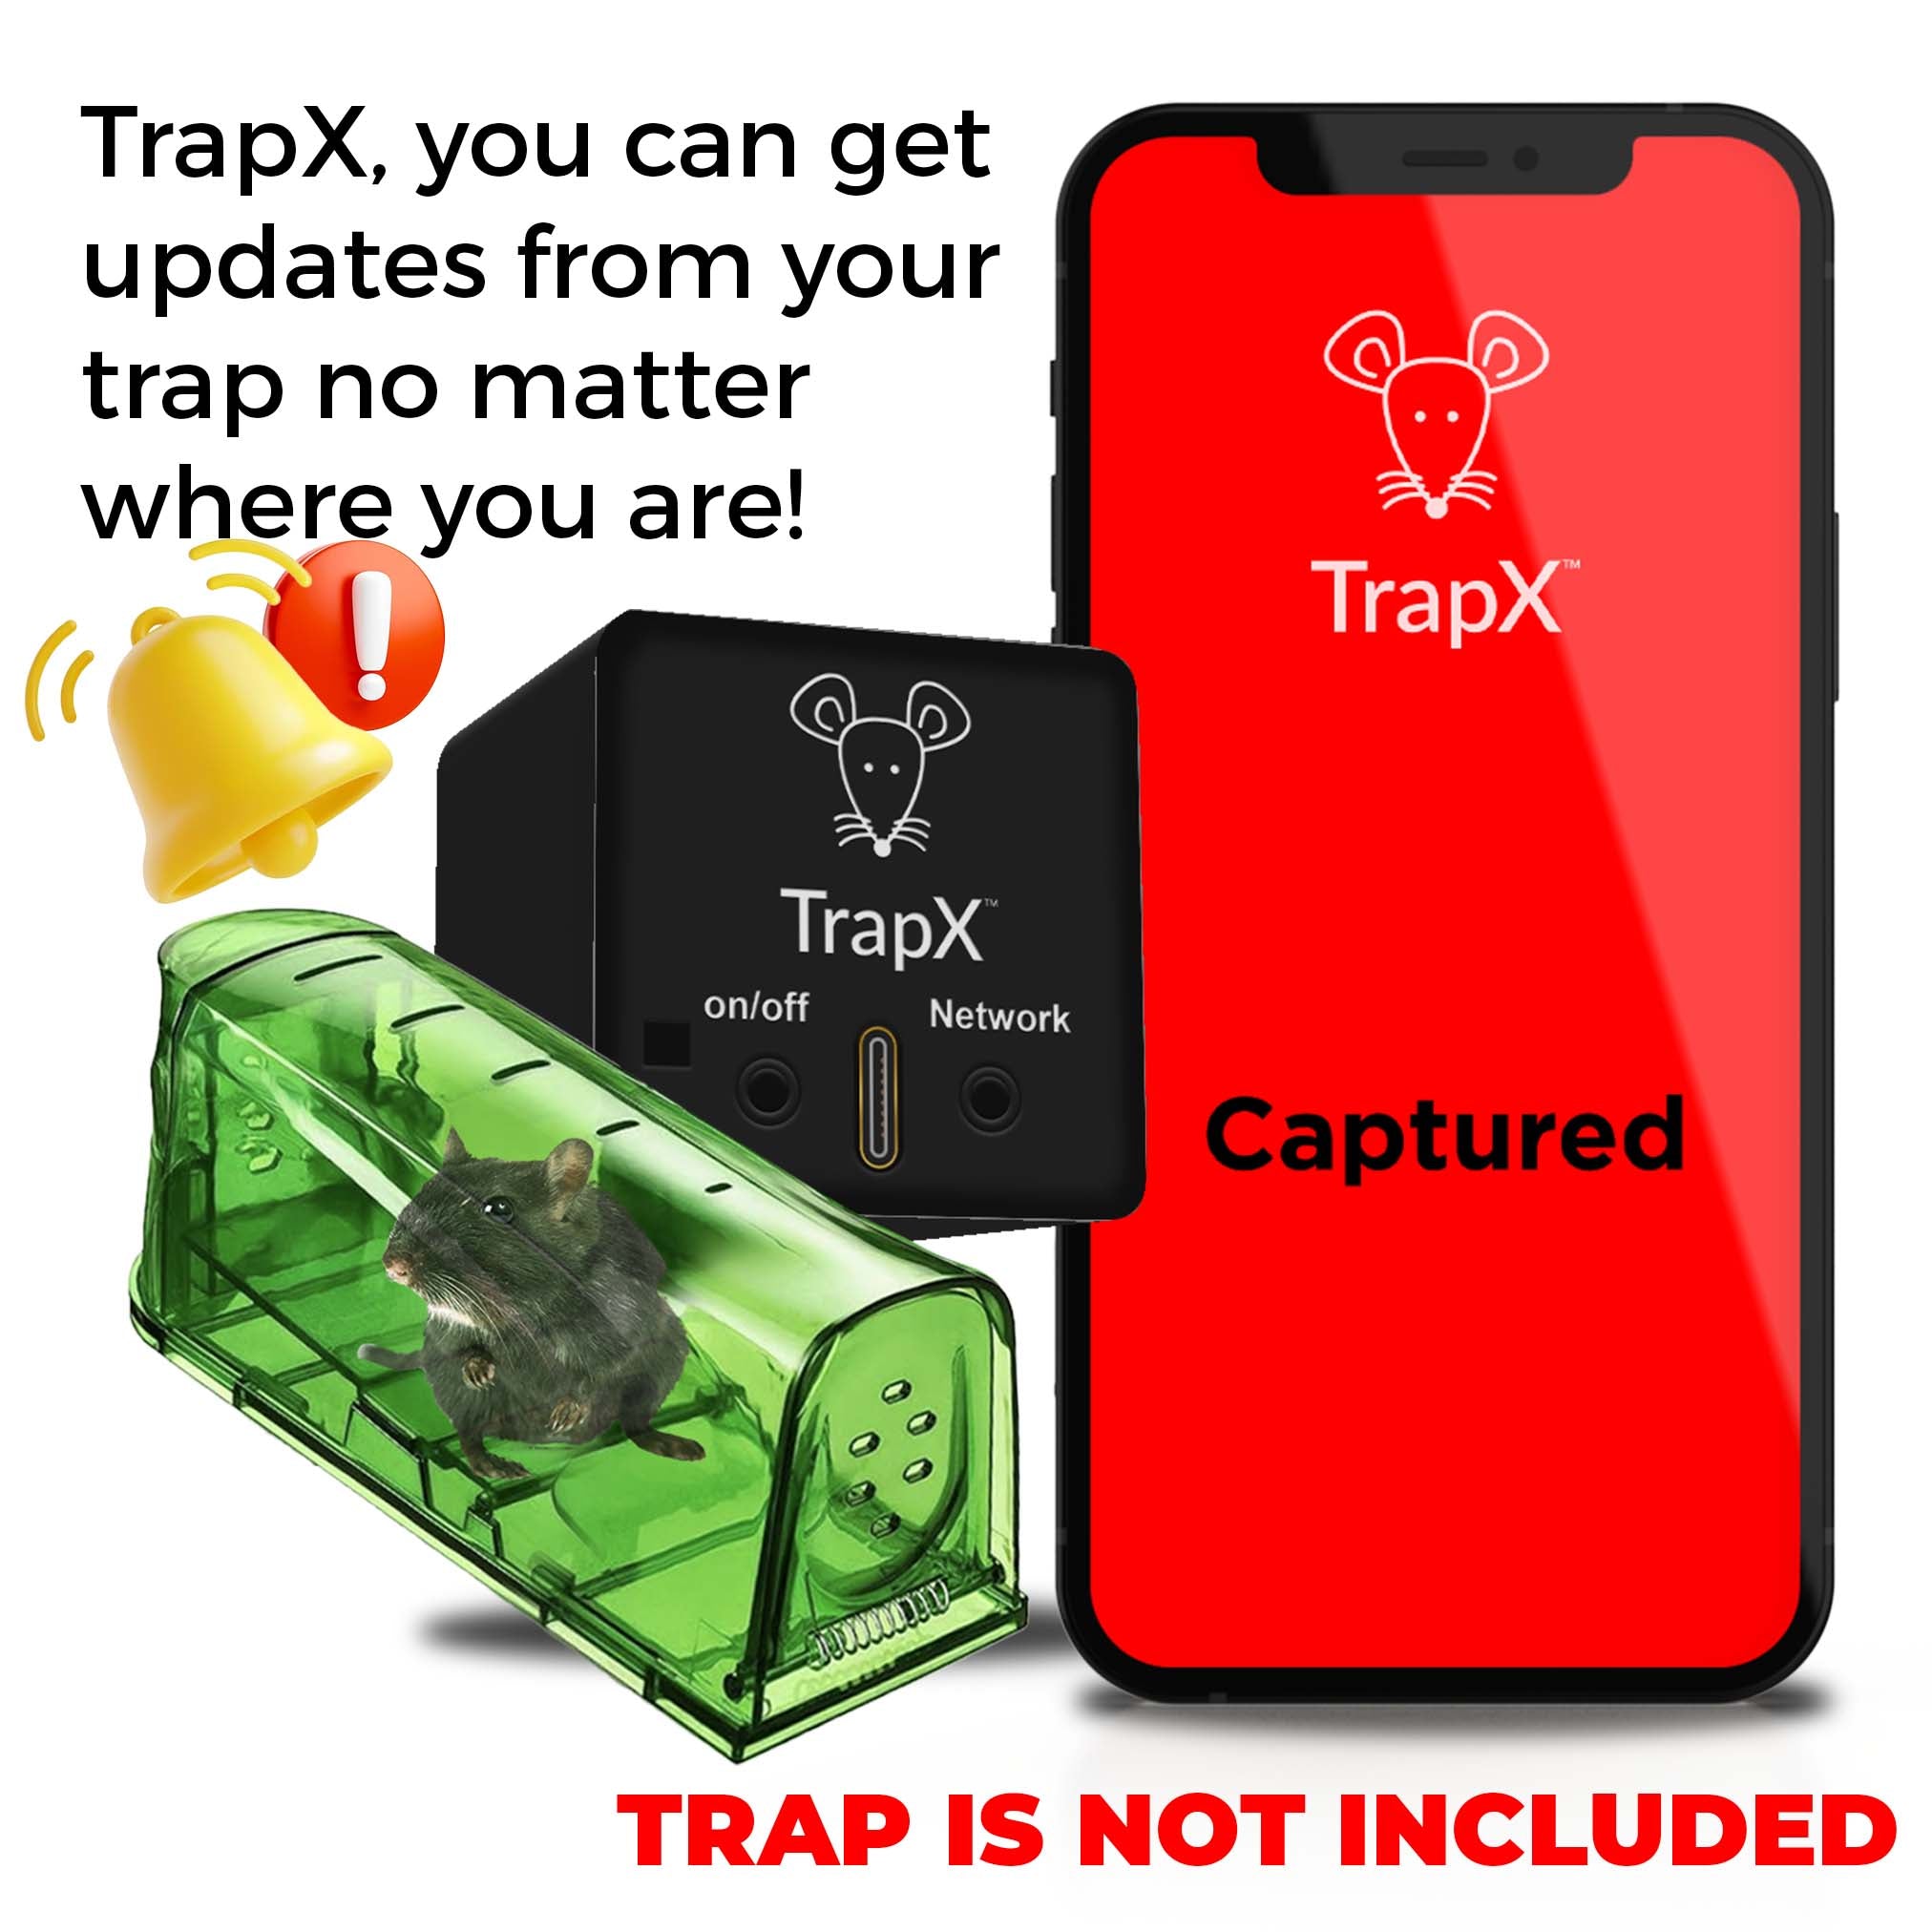 rat trap vs mouse trap